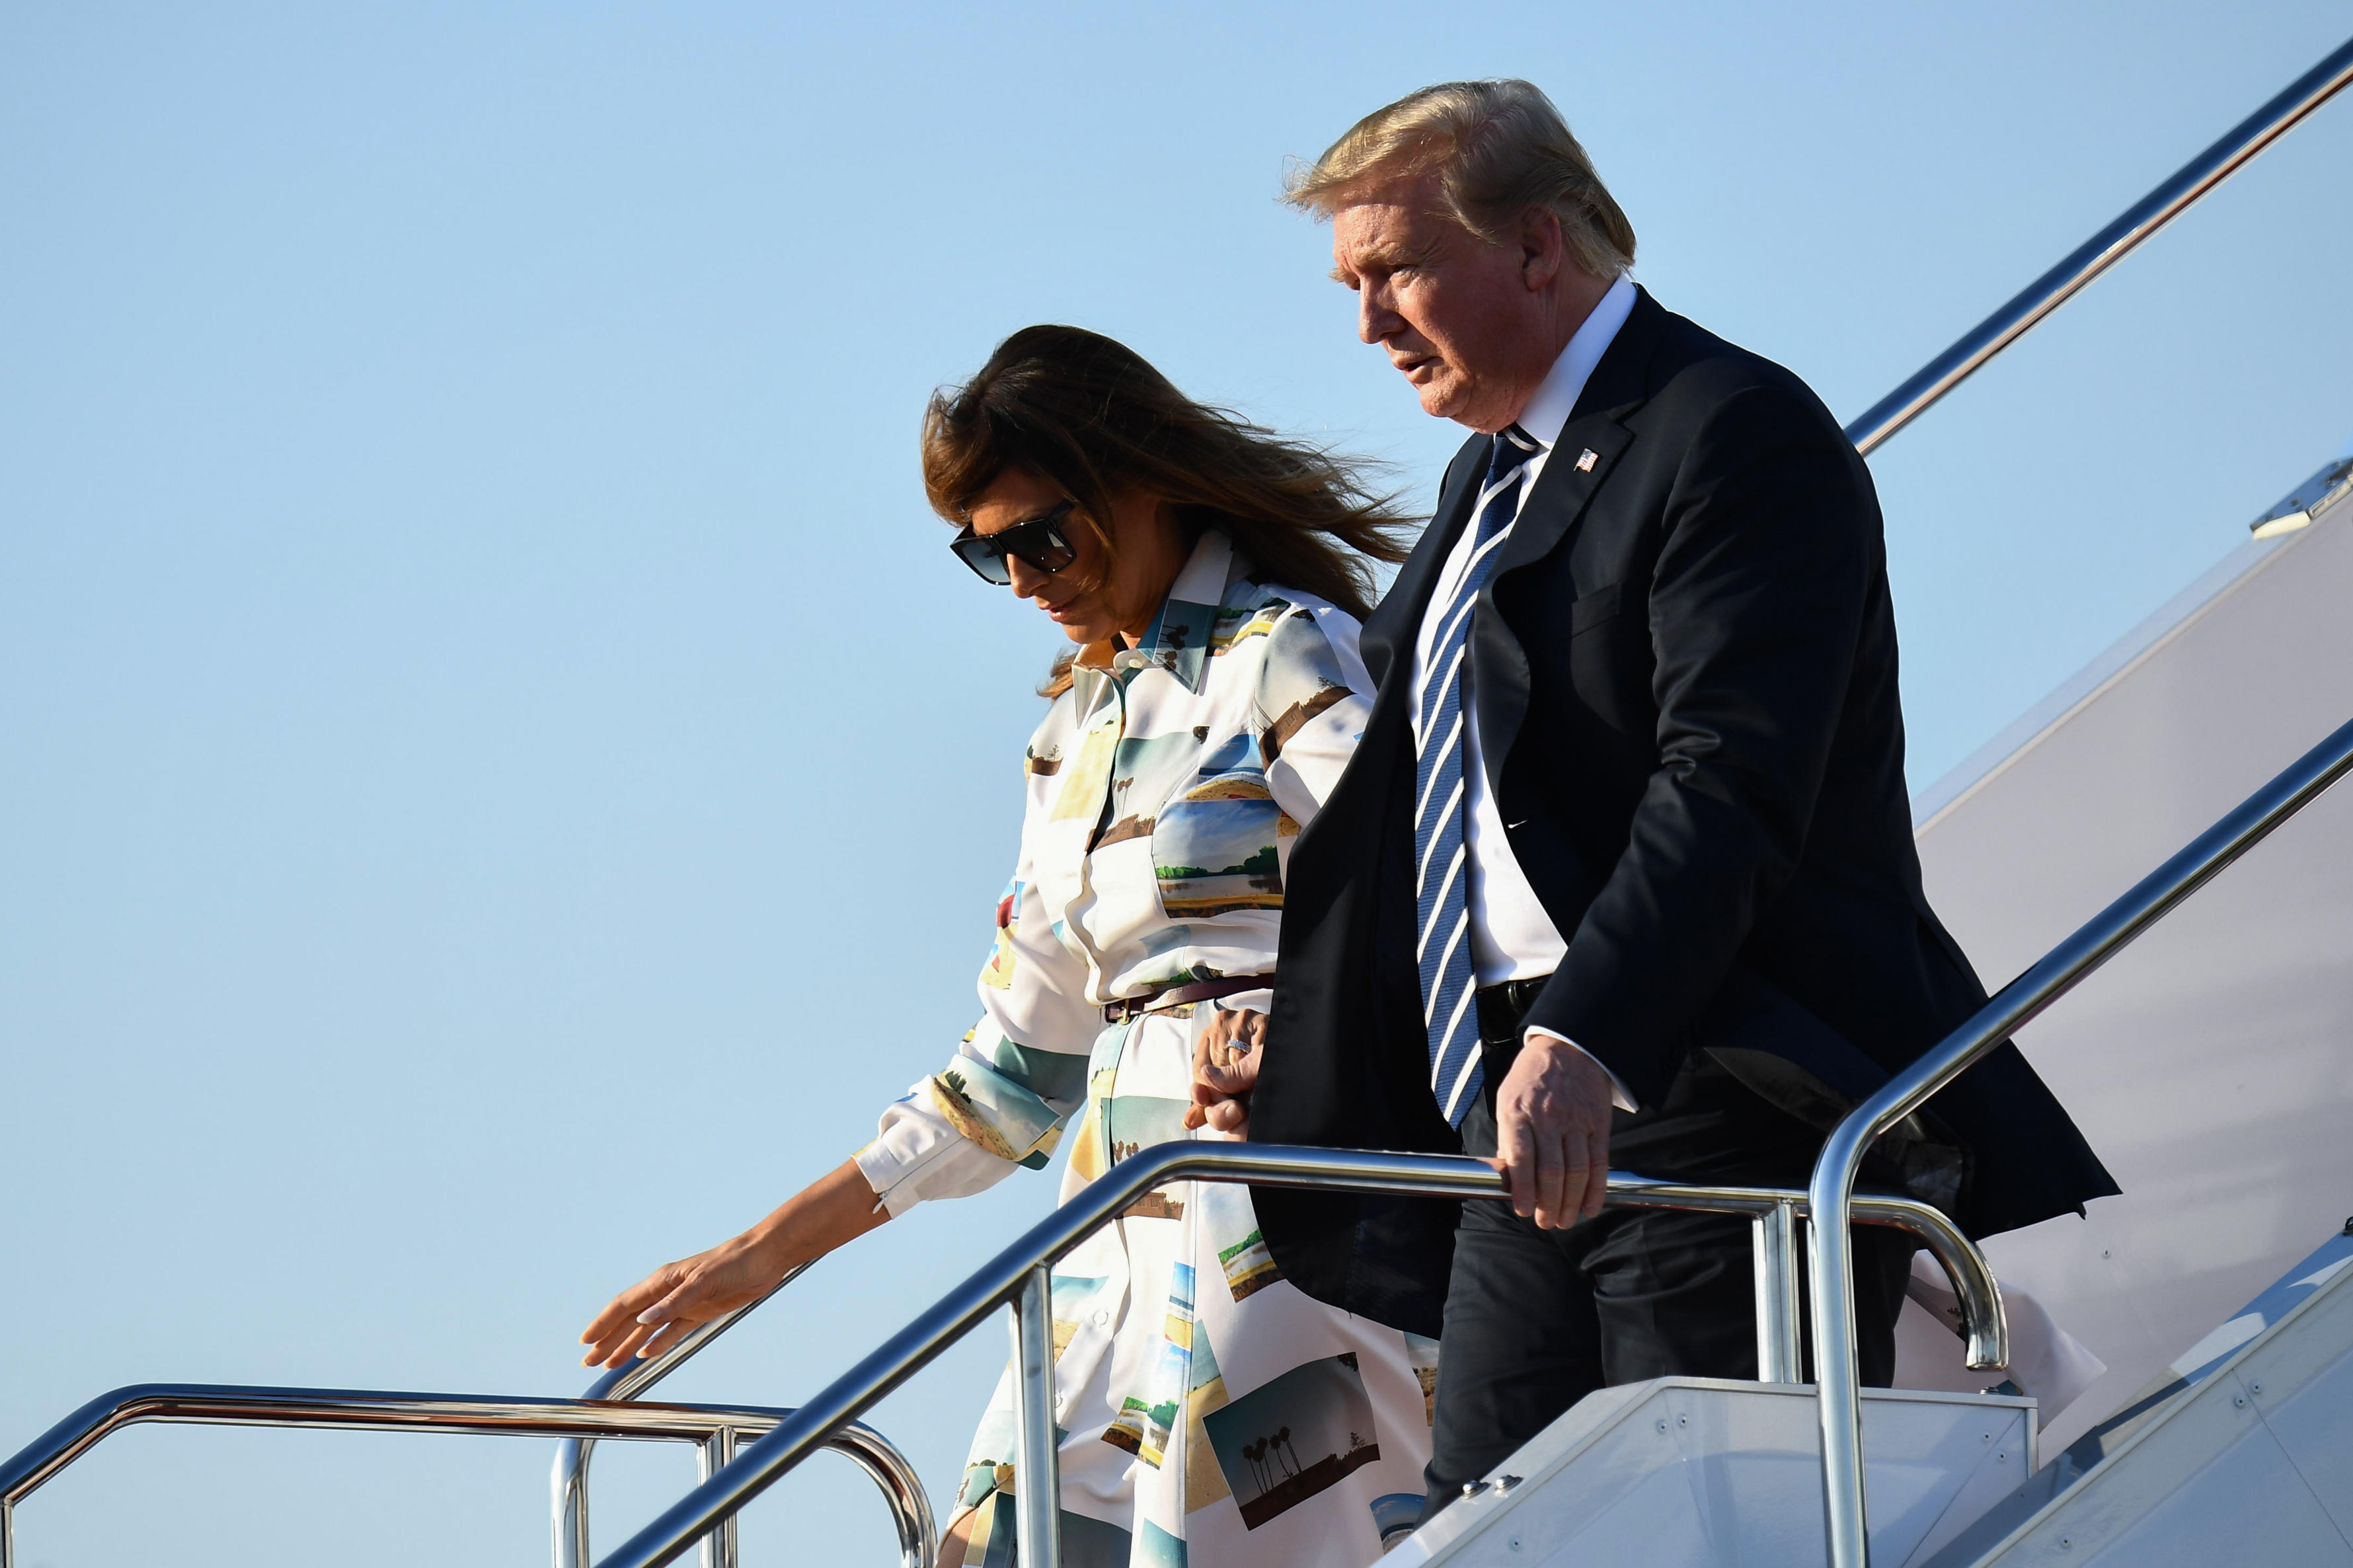 President Trump is accompanied by first lady Melania Trump.